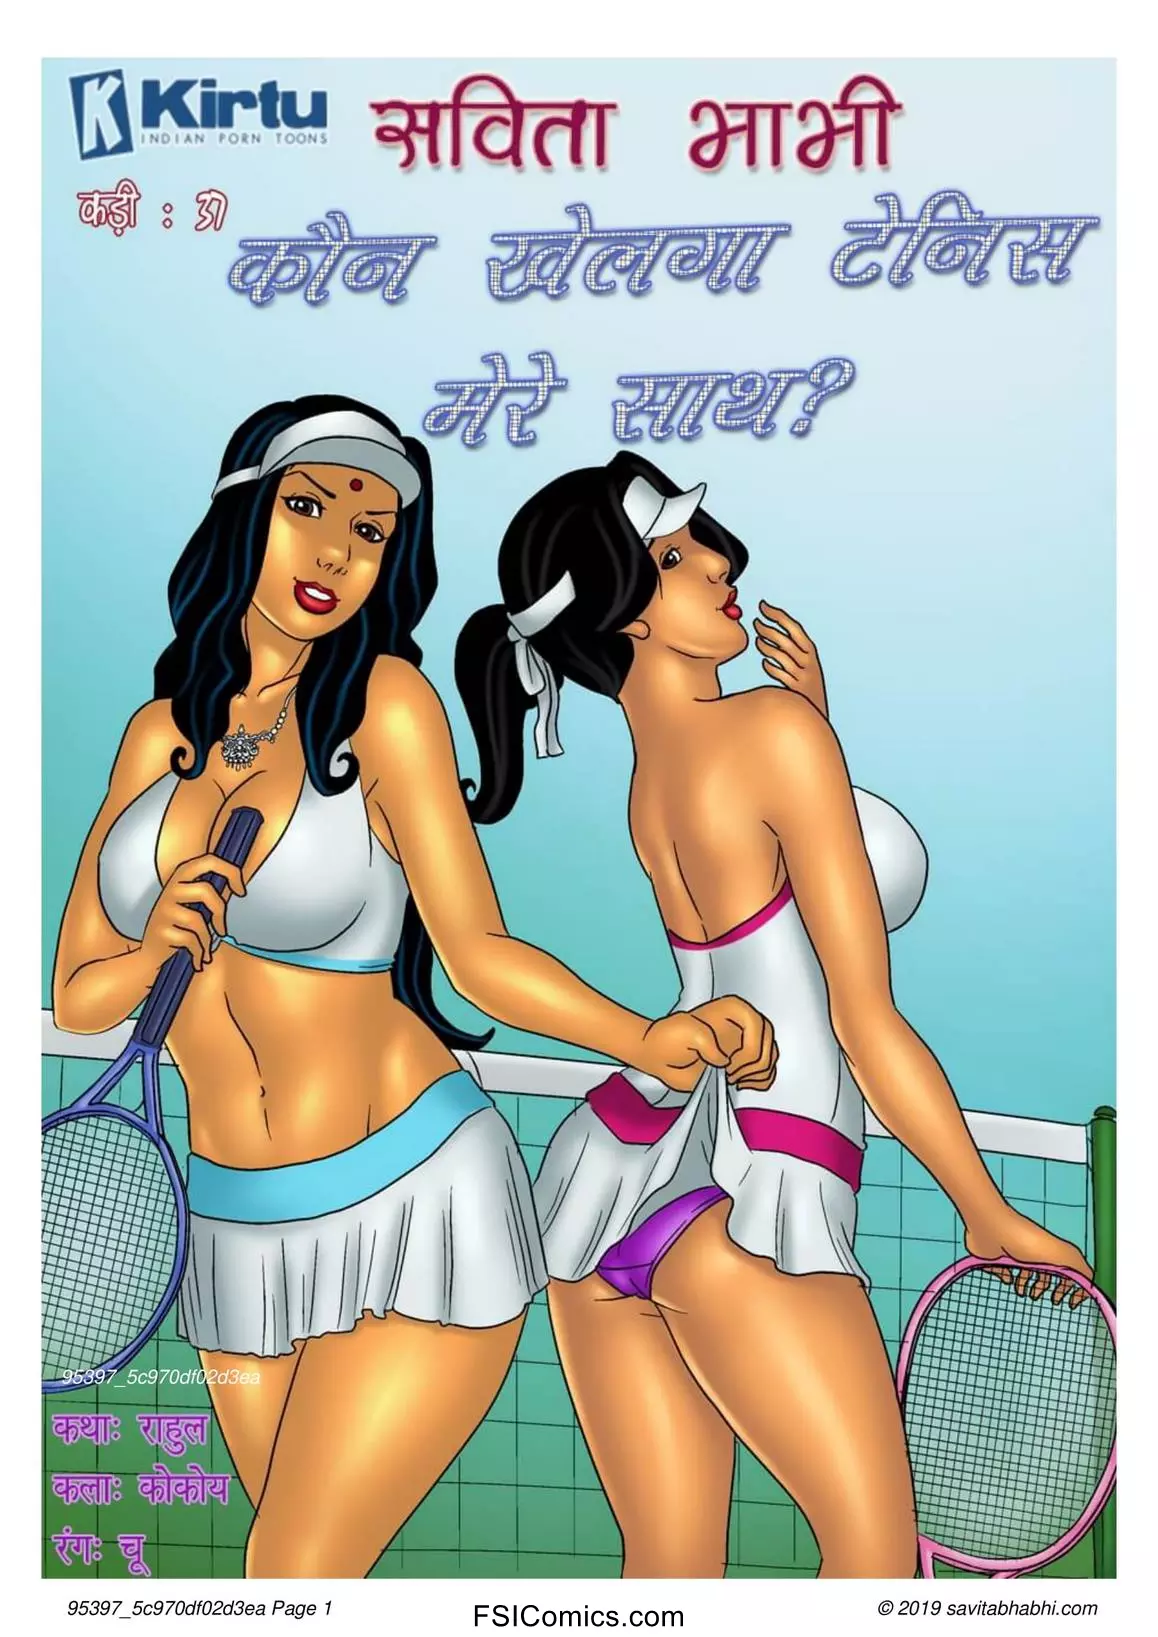 Savita Bhabhi Episode 37 Hindi – Kaun Khelega Tennis Mere Sath ? (कौन खेलेगा टेनिस मेरे साथ?) - 7 - FSIComics